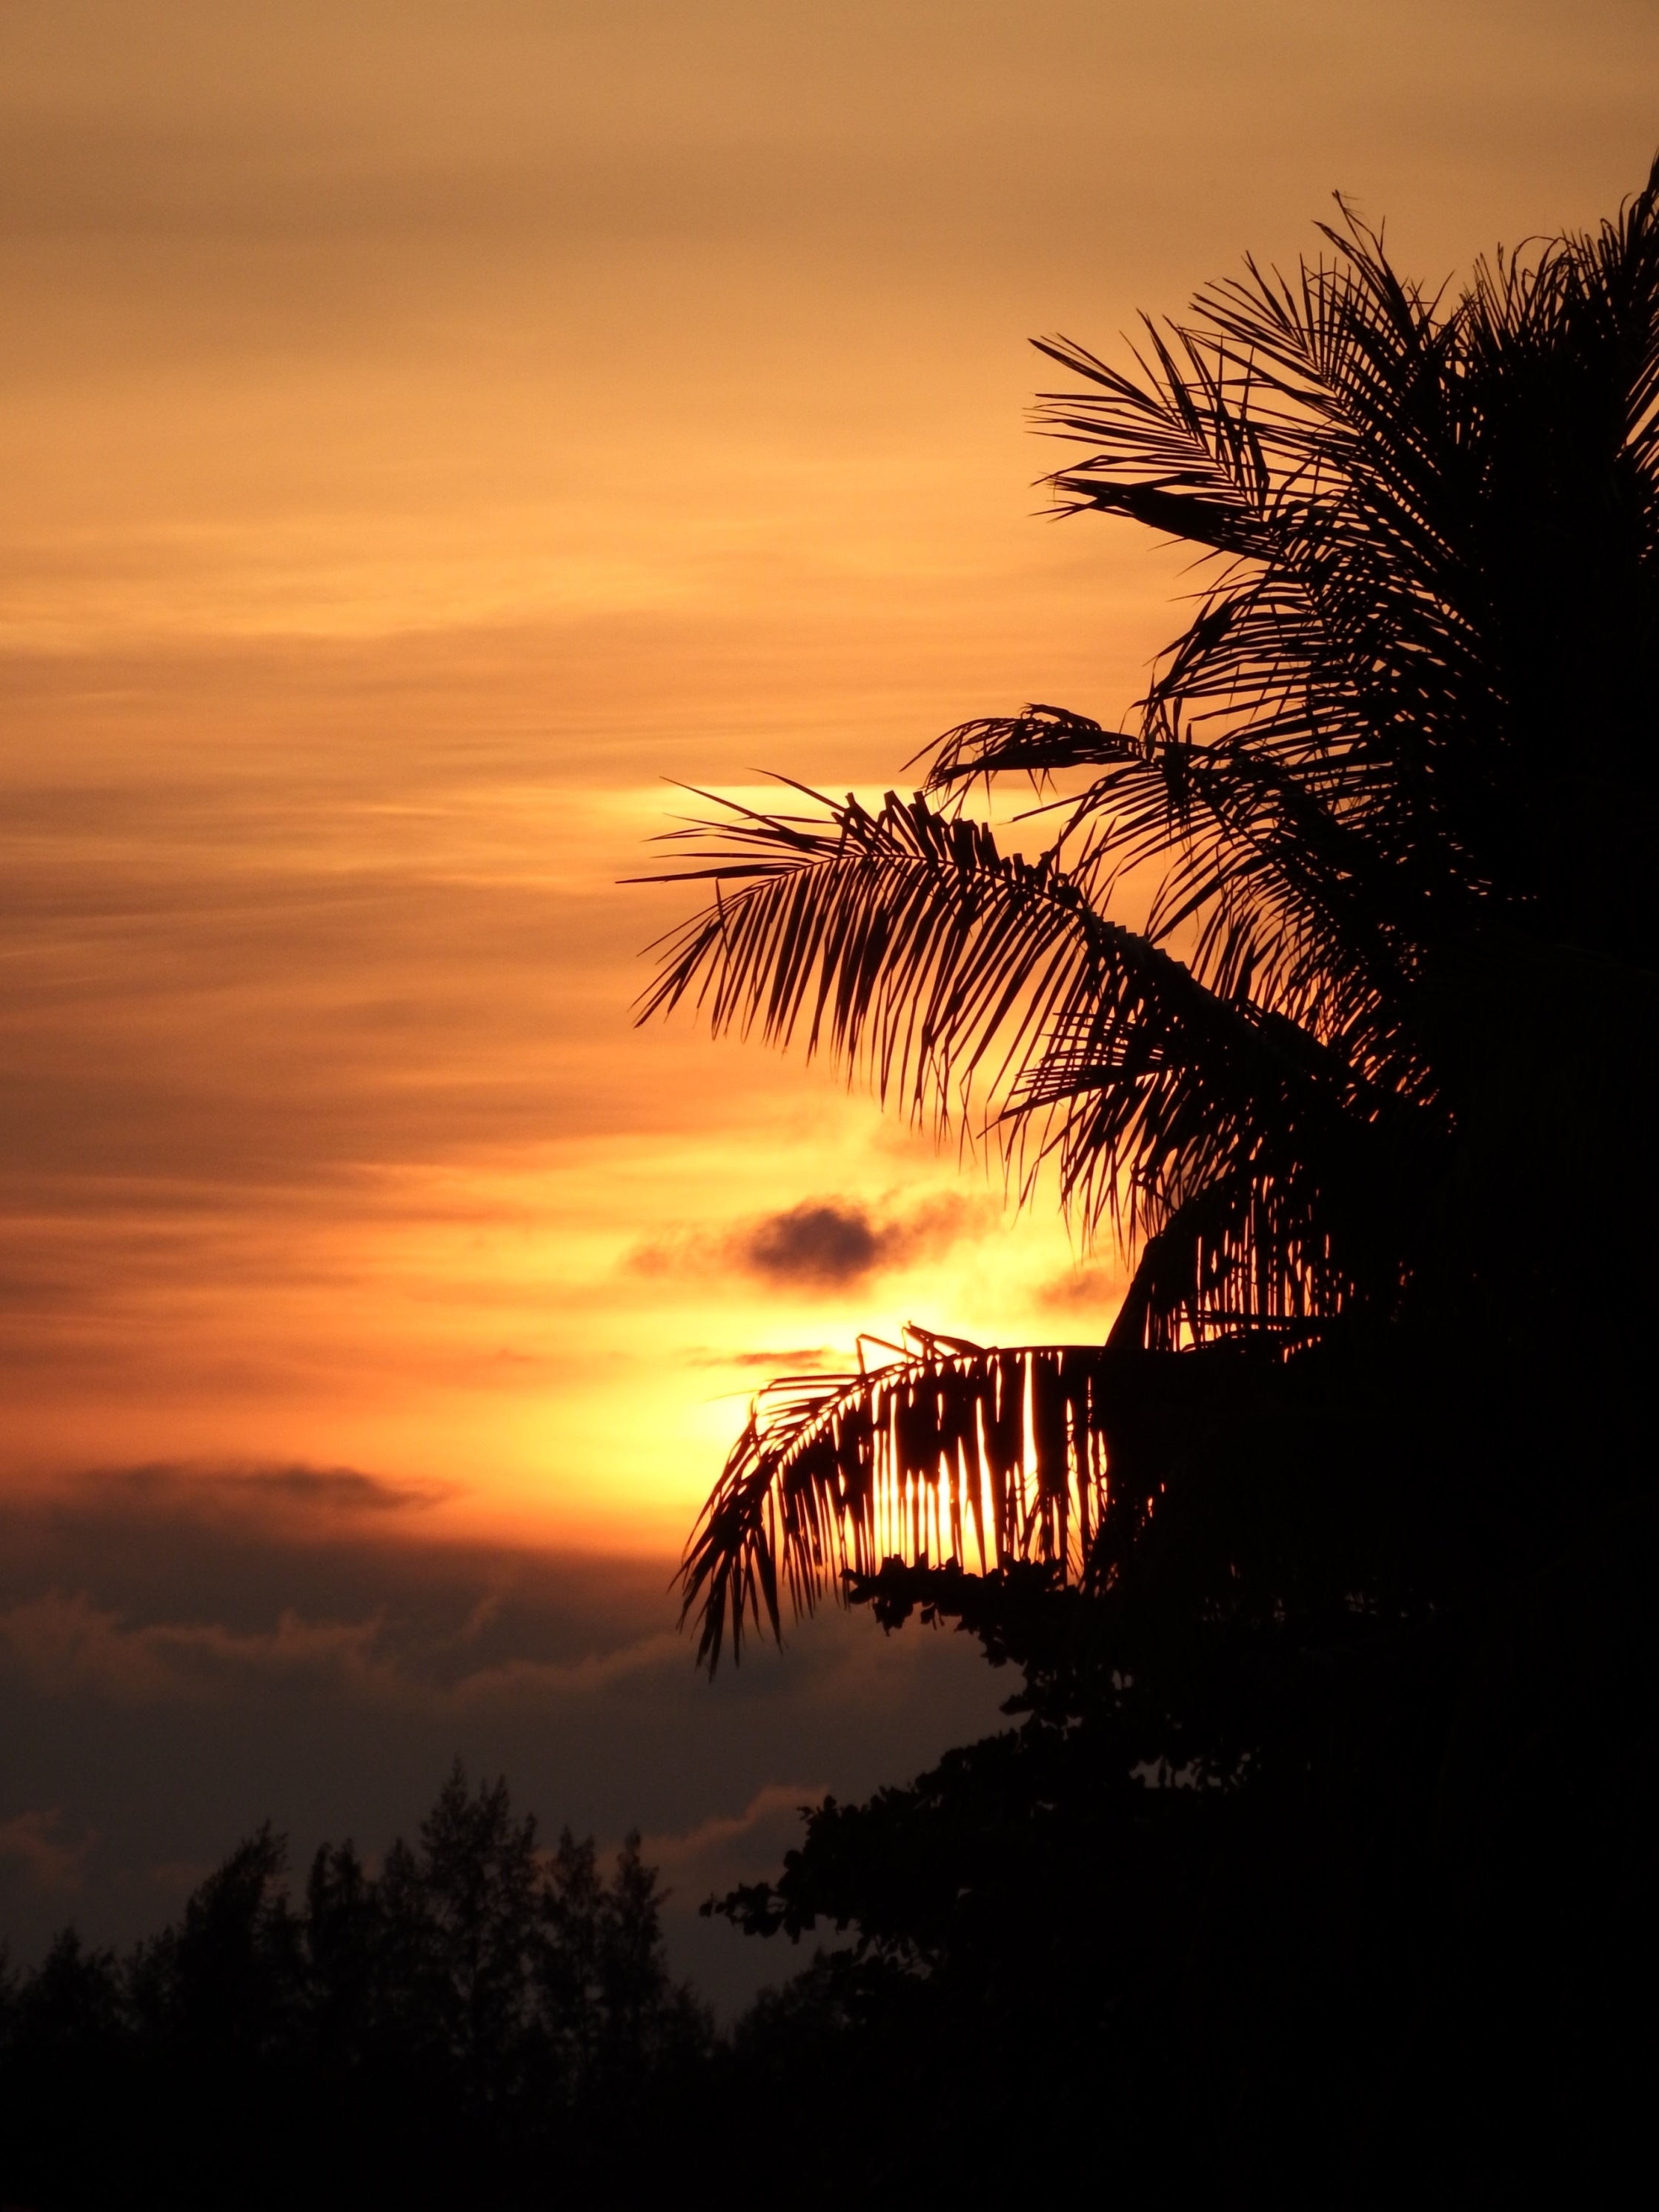 Tropical palm tree sunset photo